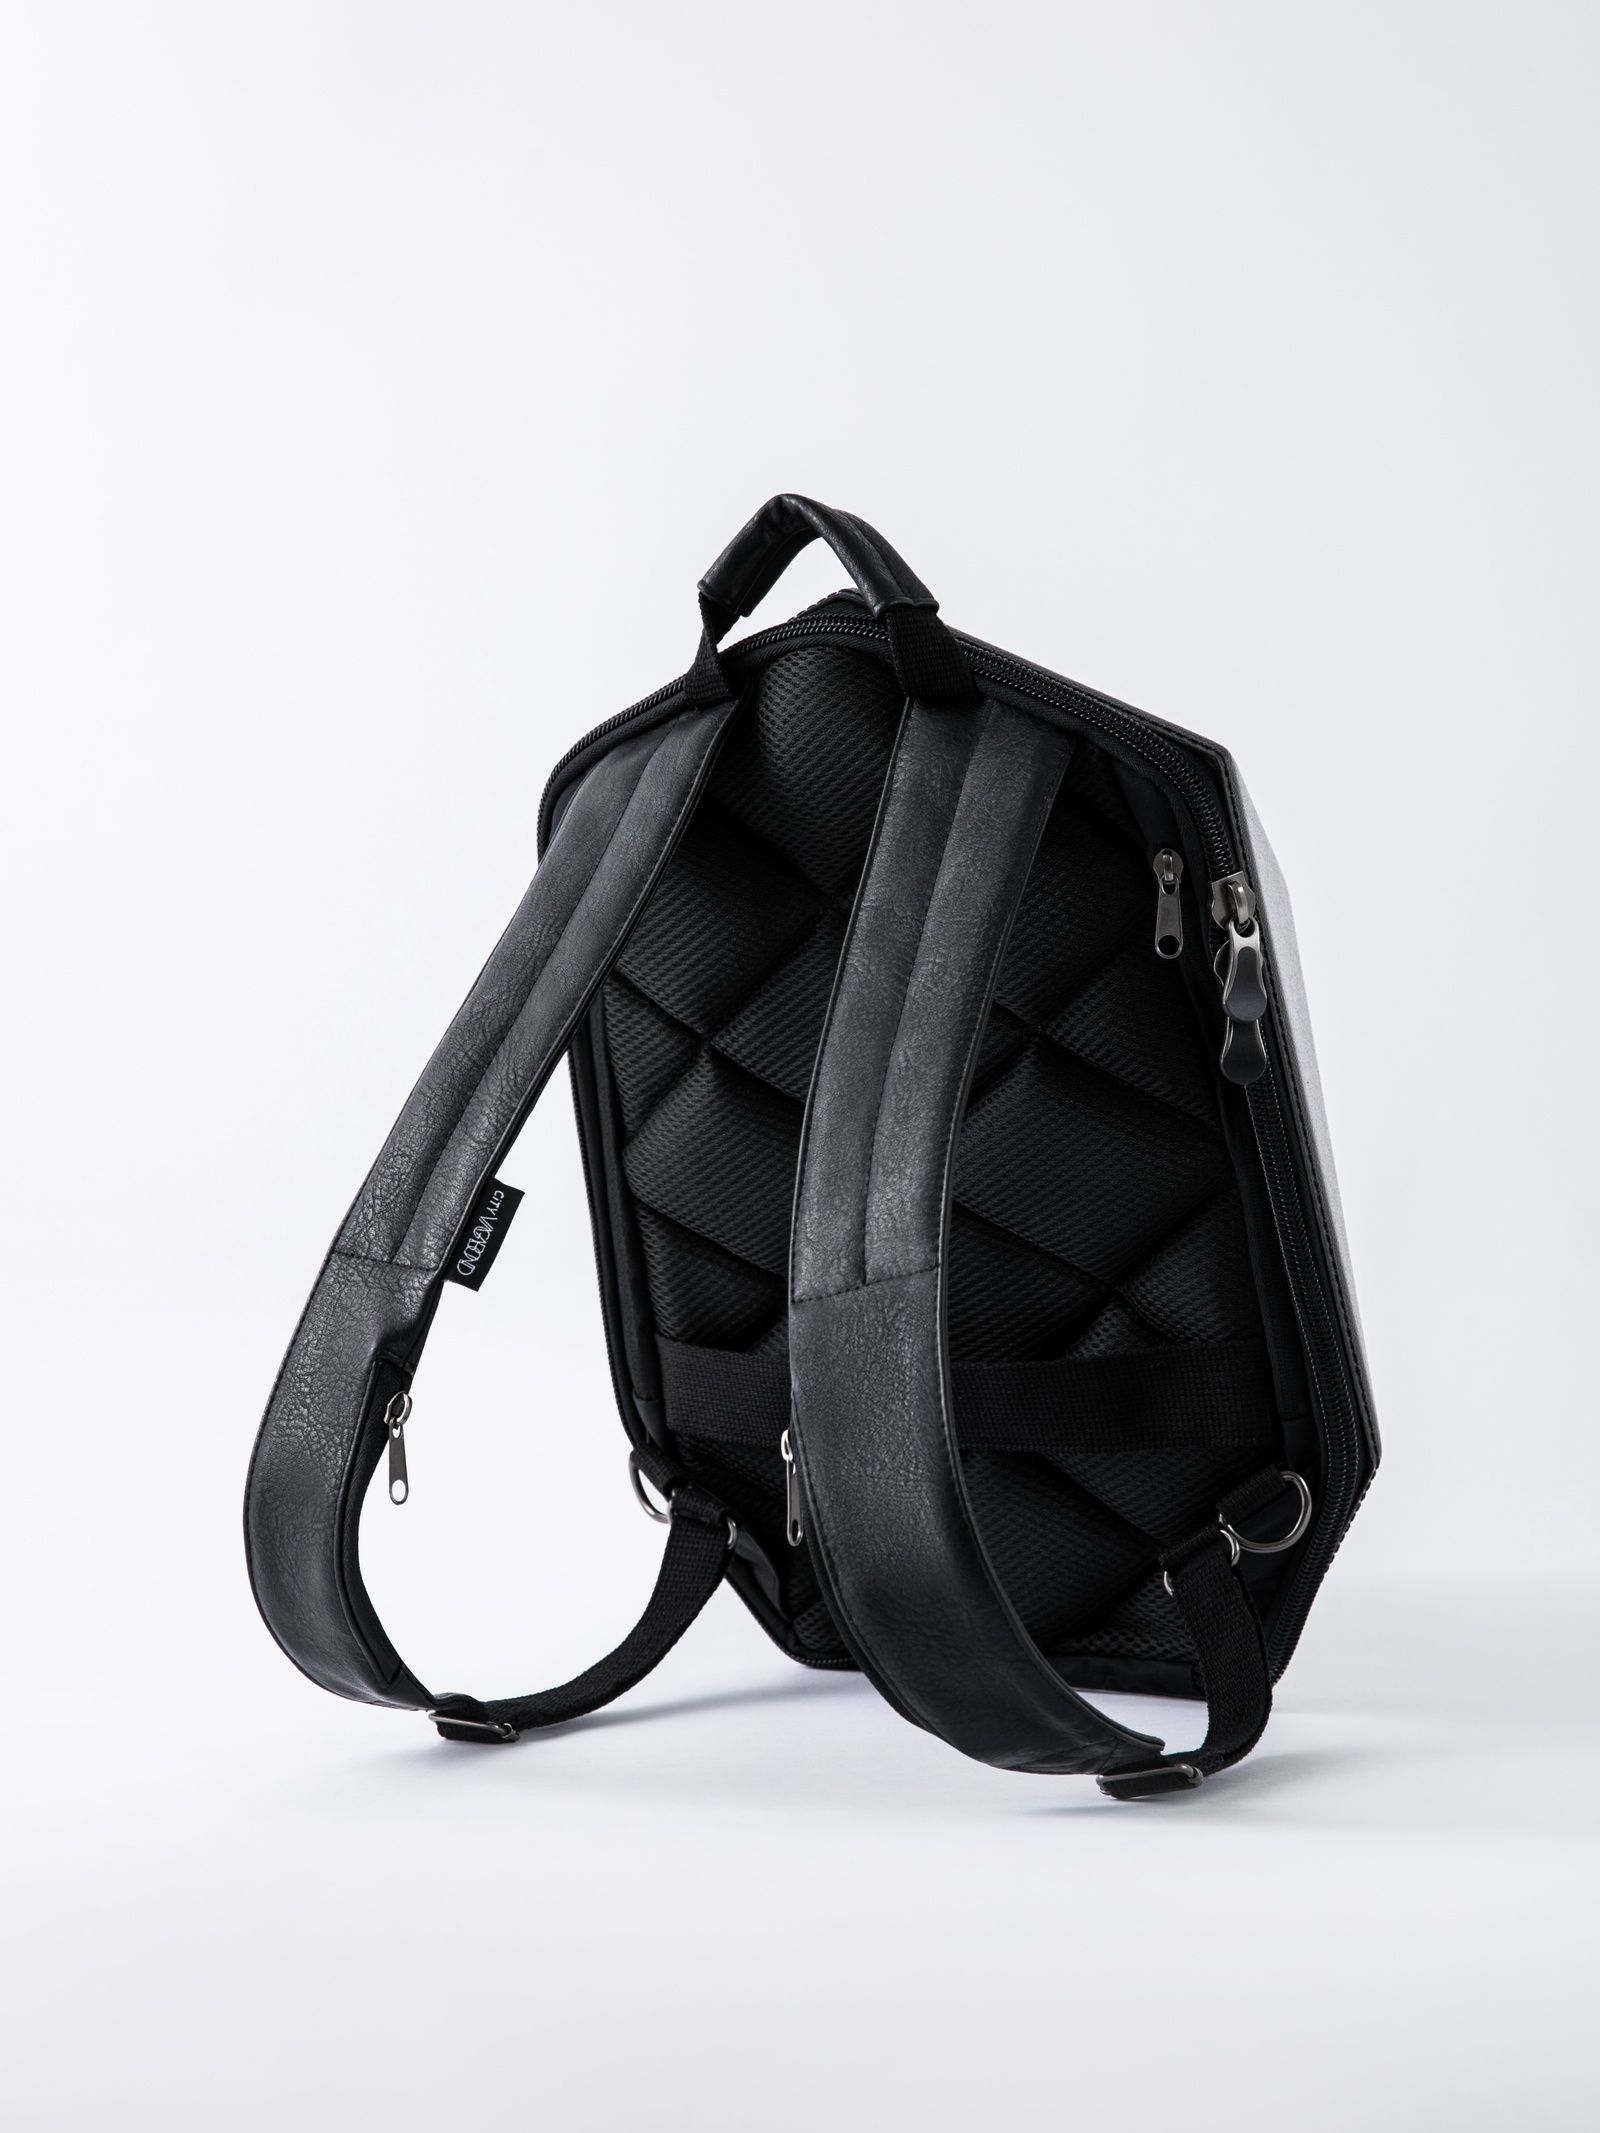  SuperHero Backpack Black, 